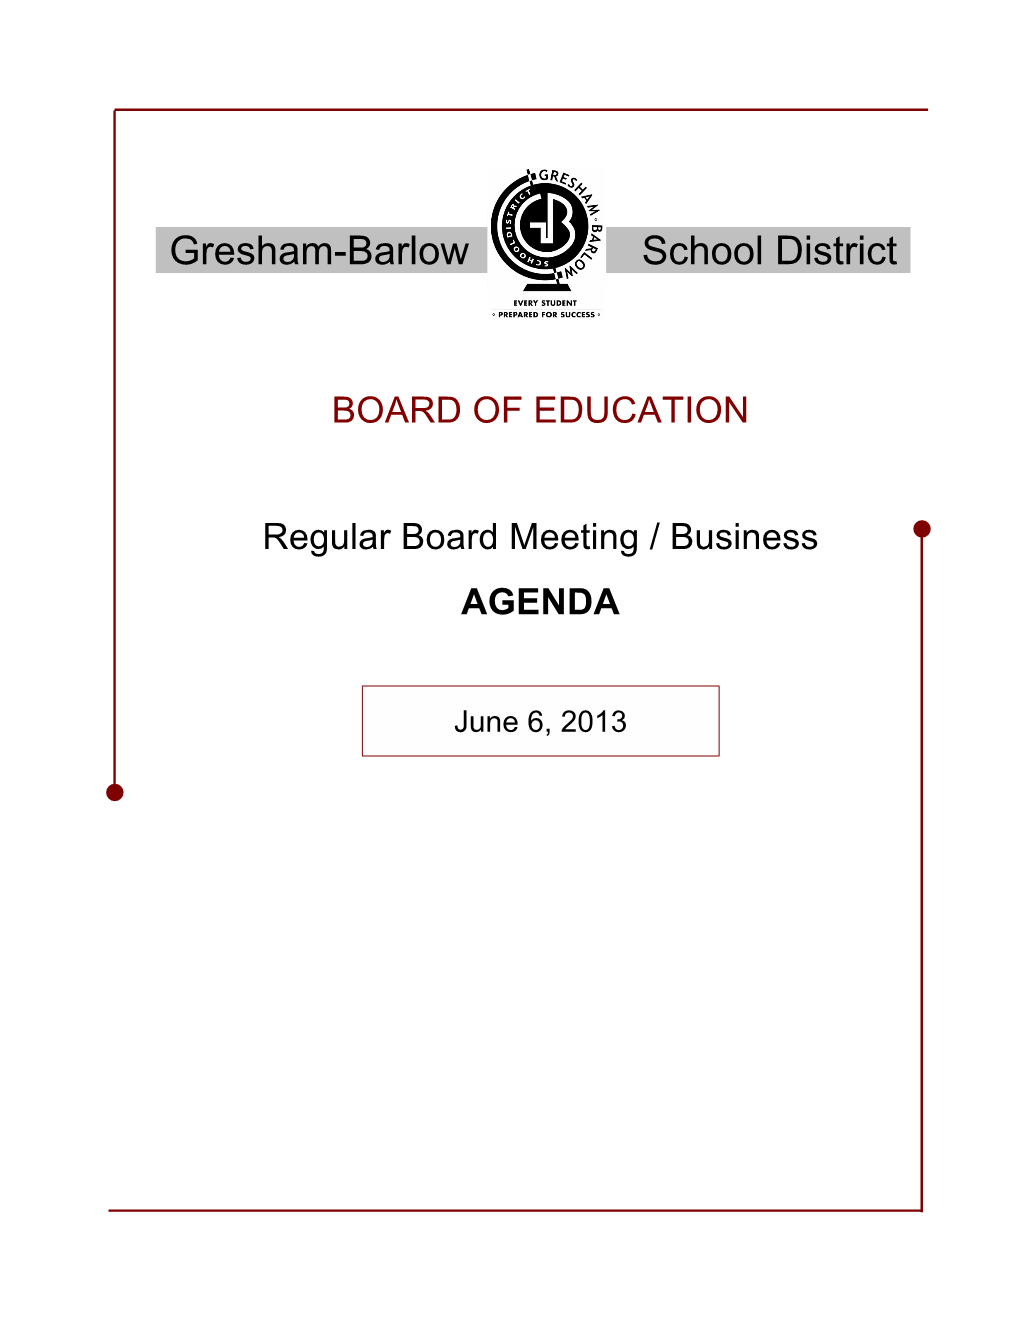 Regular Board Meeting / Business AGENDA